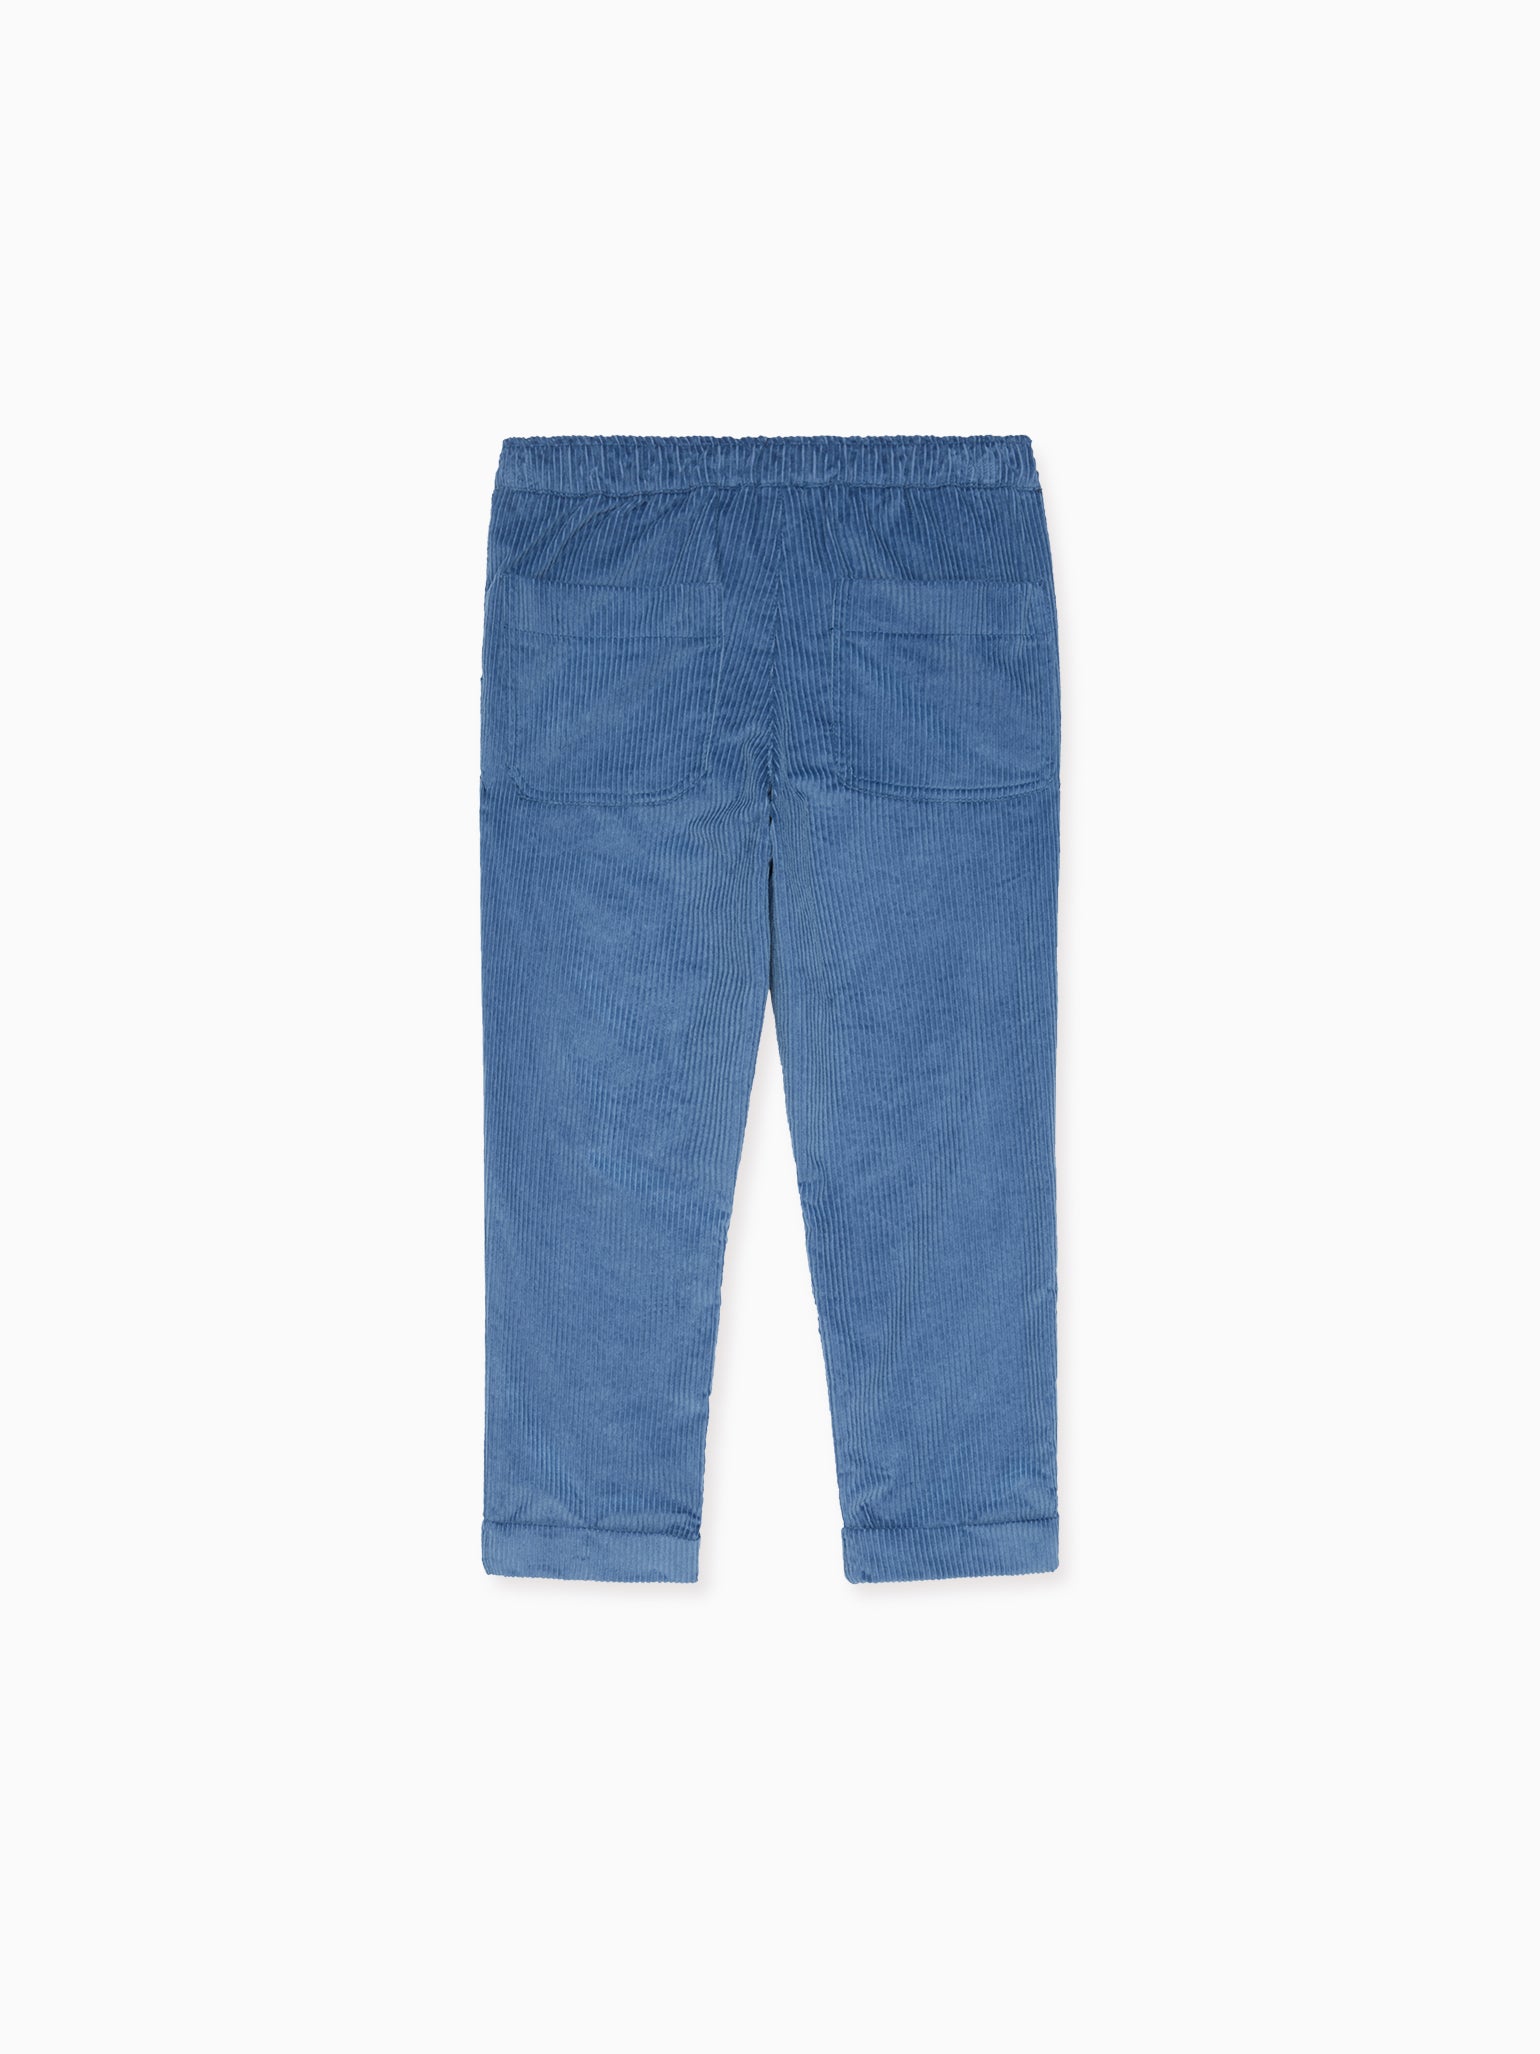 Dusty Blue Benito Boy Trousers